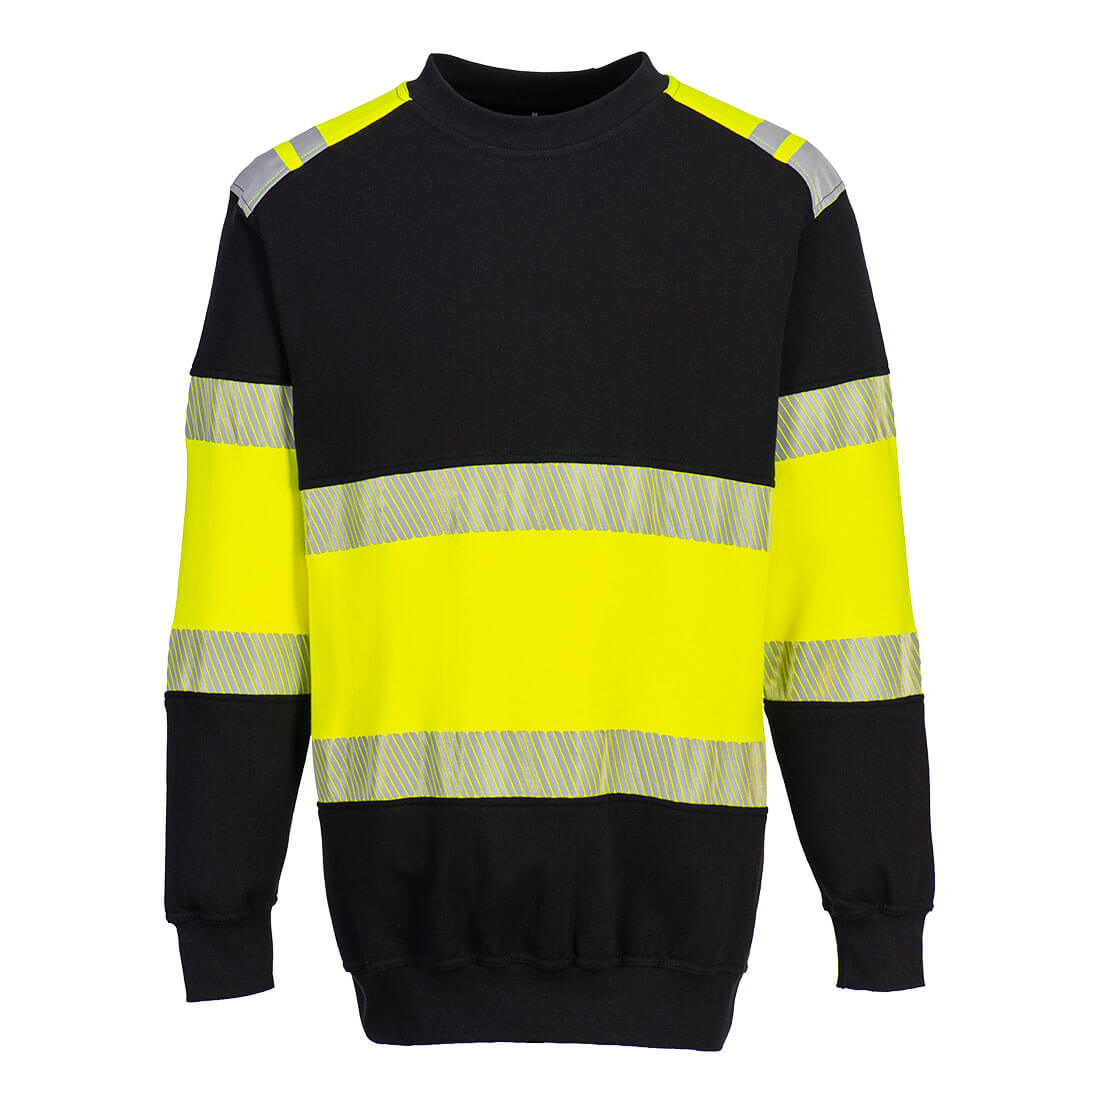 FR716 - PW3 Flame Resistant Class 1 Sweatshirt